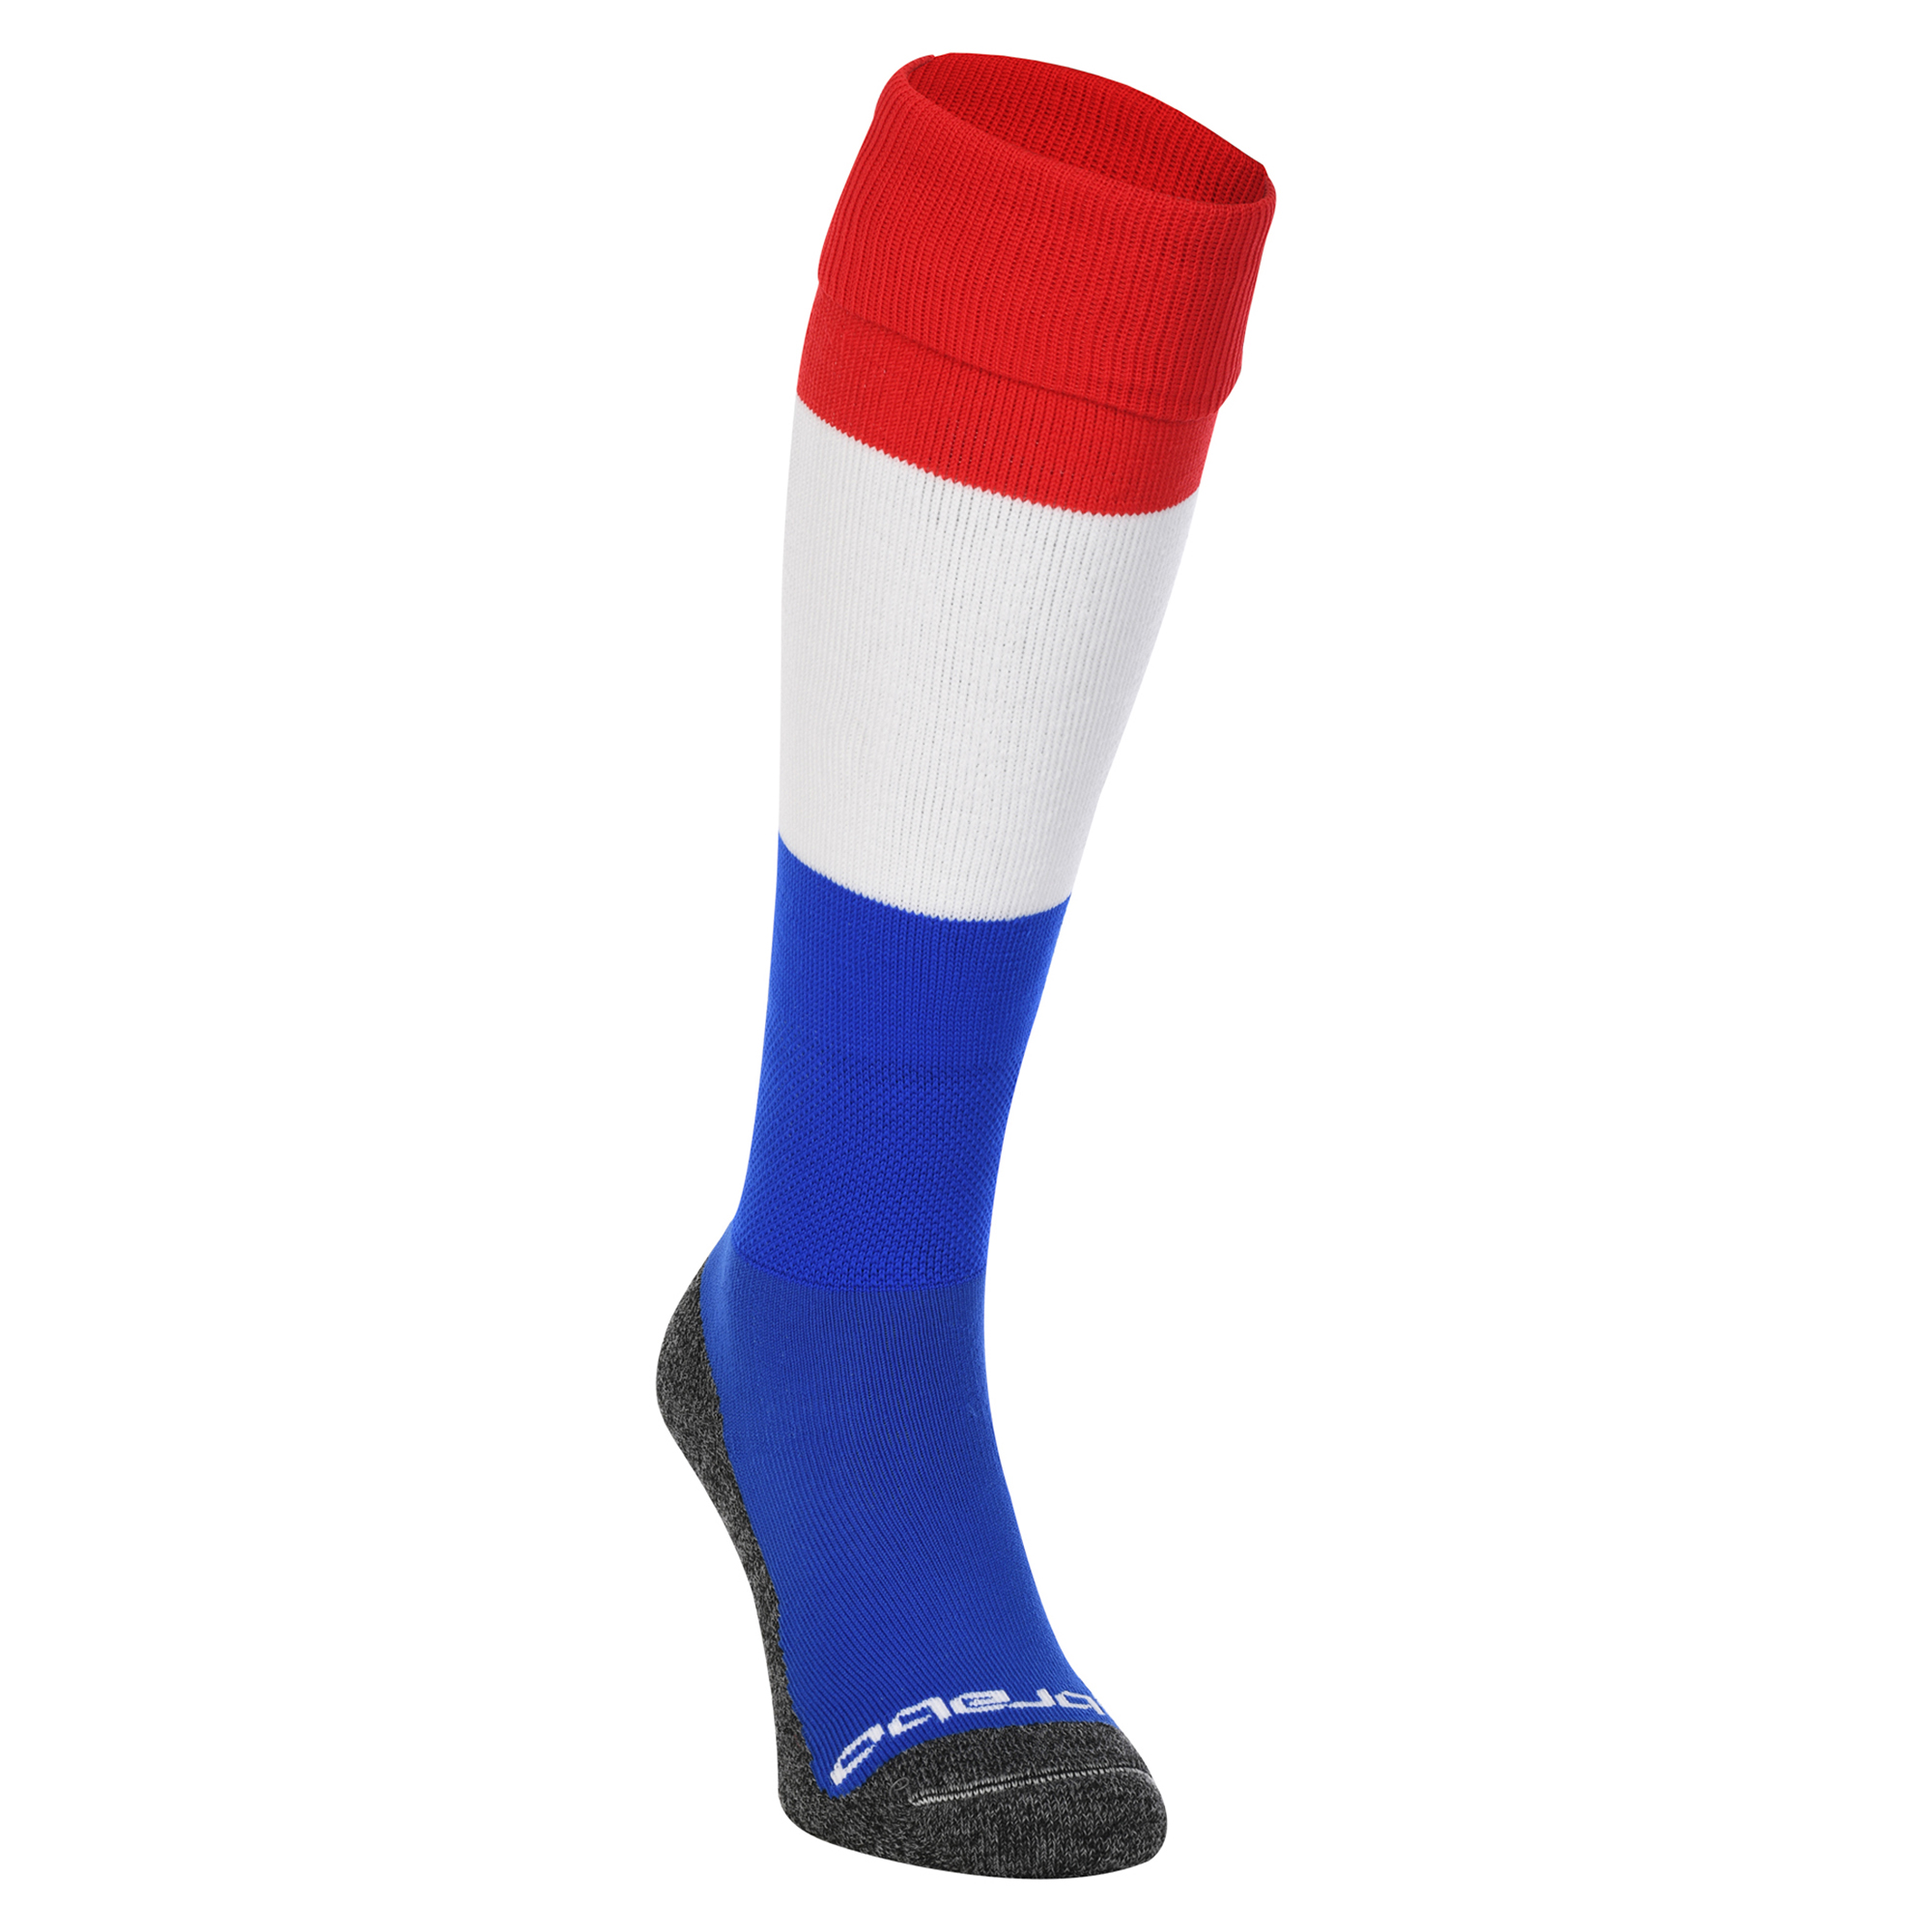 Socks The Netherlands